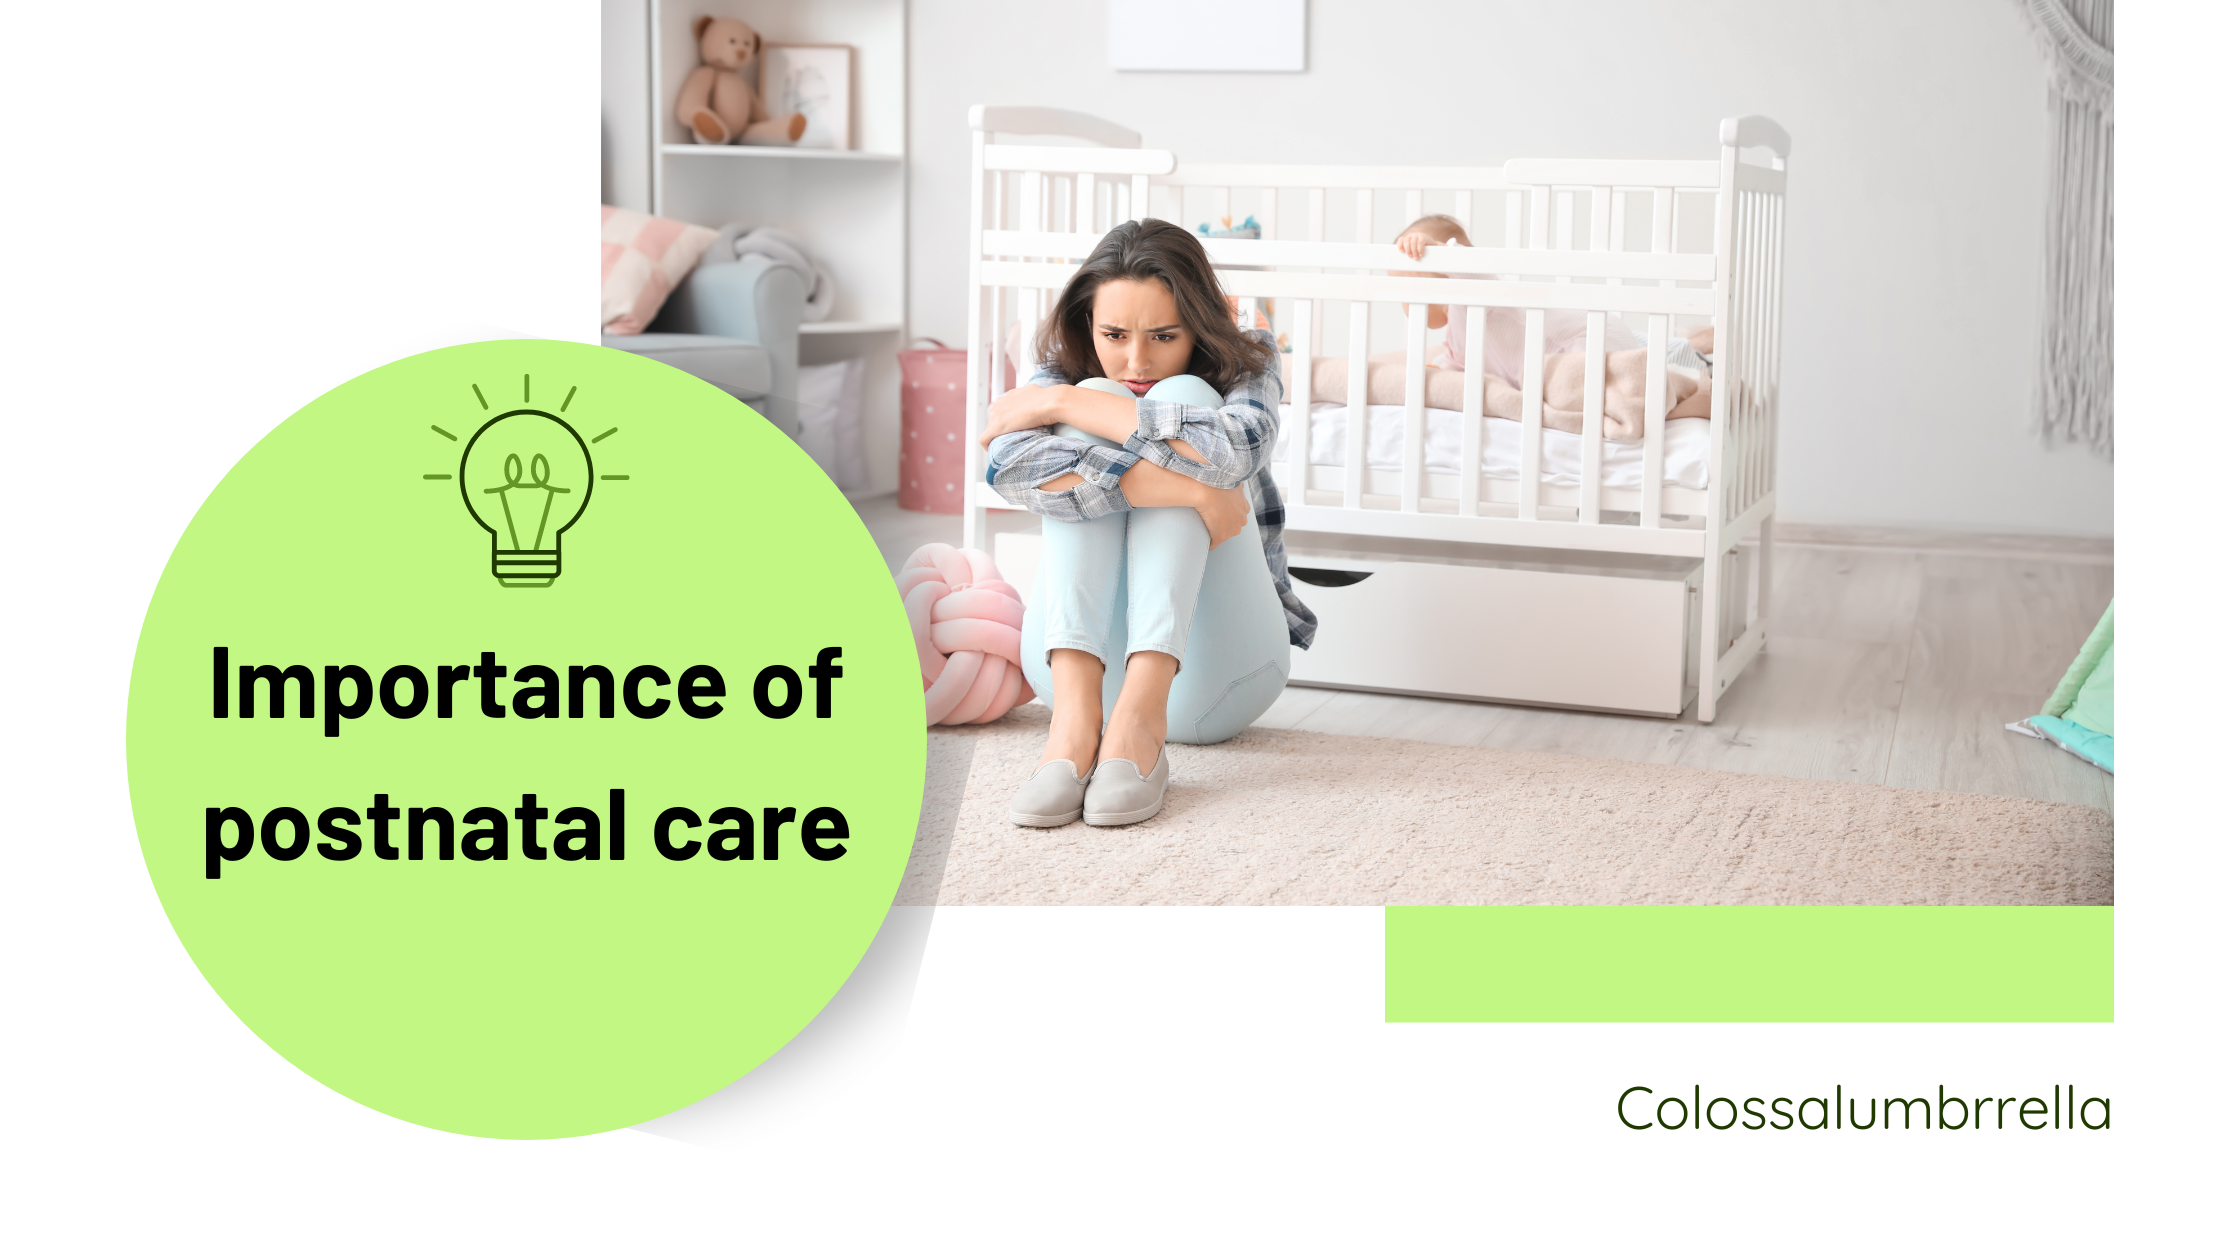 5 importance of postnatal care